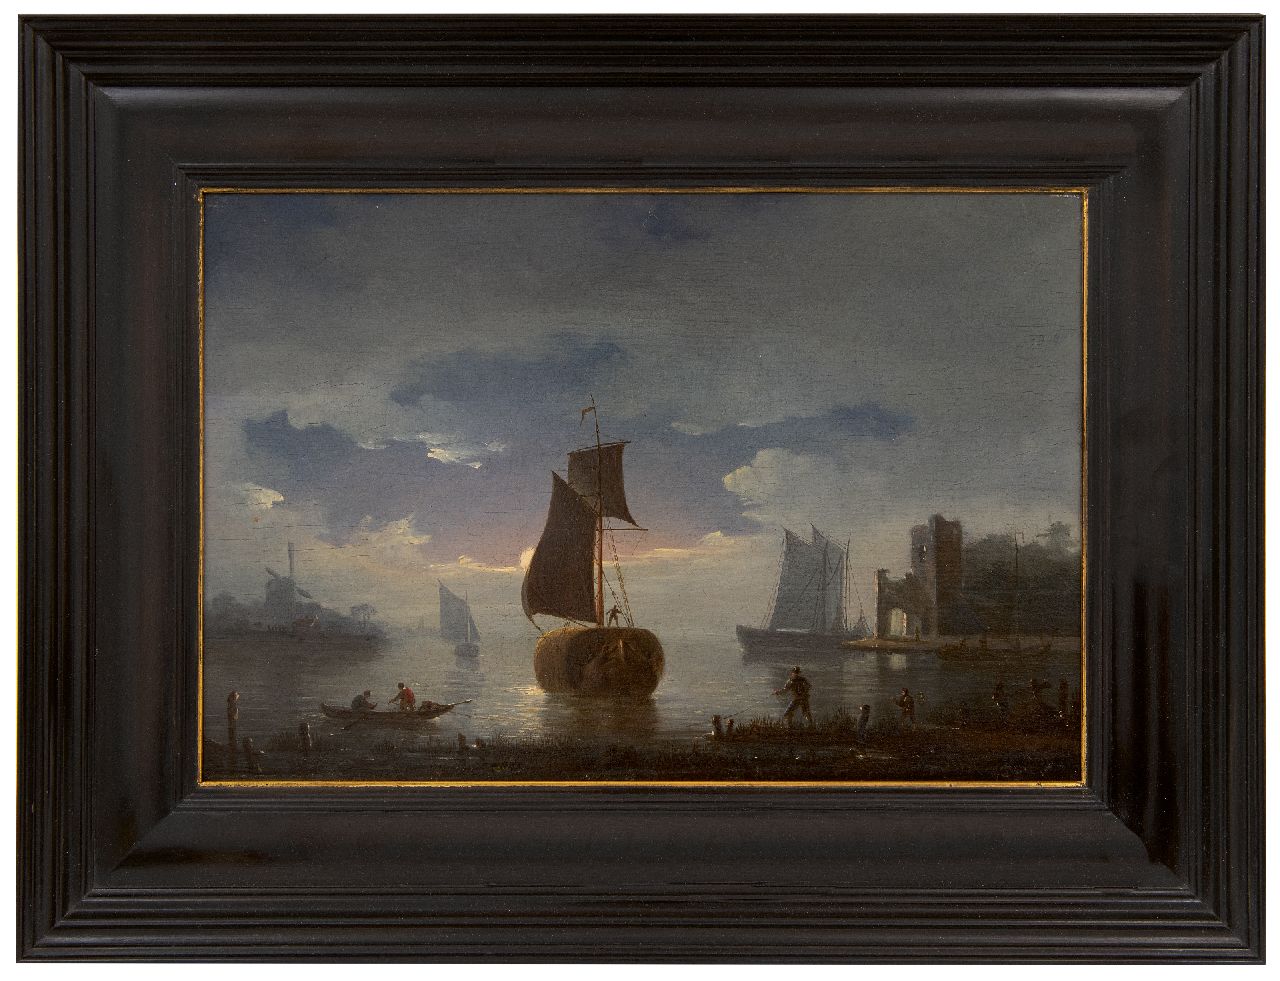 Gruijter G.  | Gerrit Gruijter | Paintings offered for sale | Mooring hayship by moonlight, oil on panel 22.4 x 33.0 cm